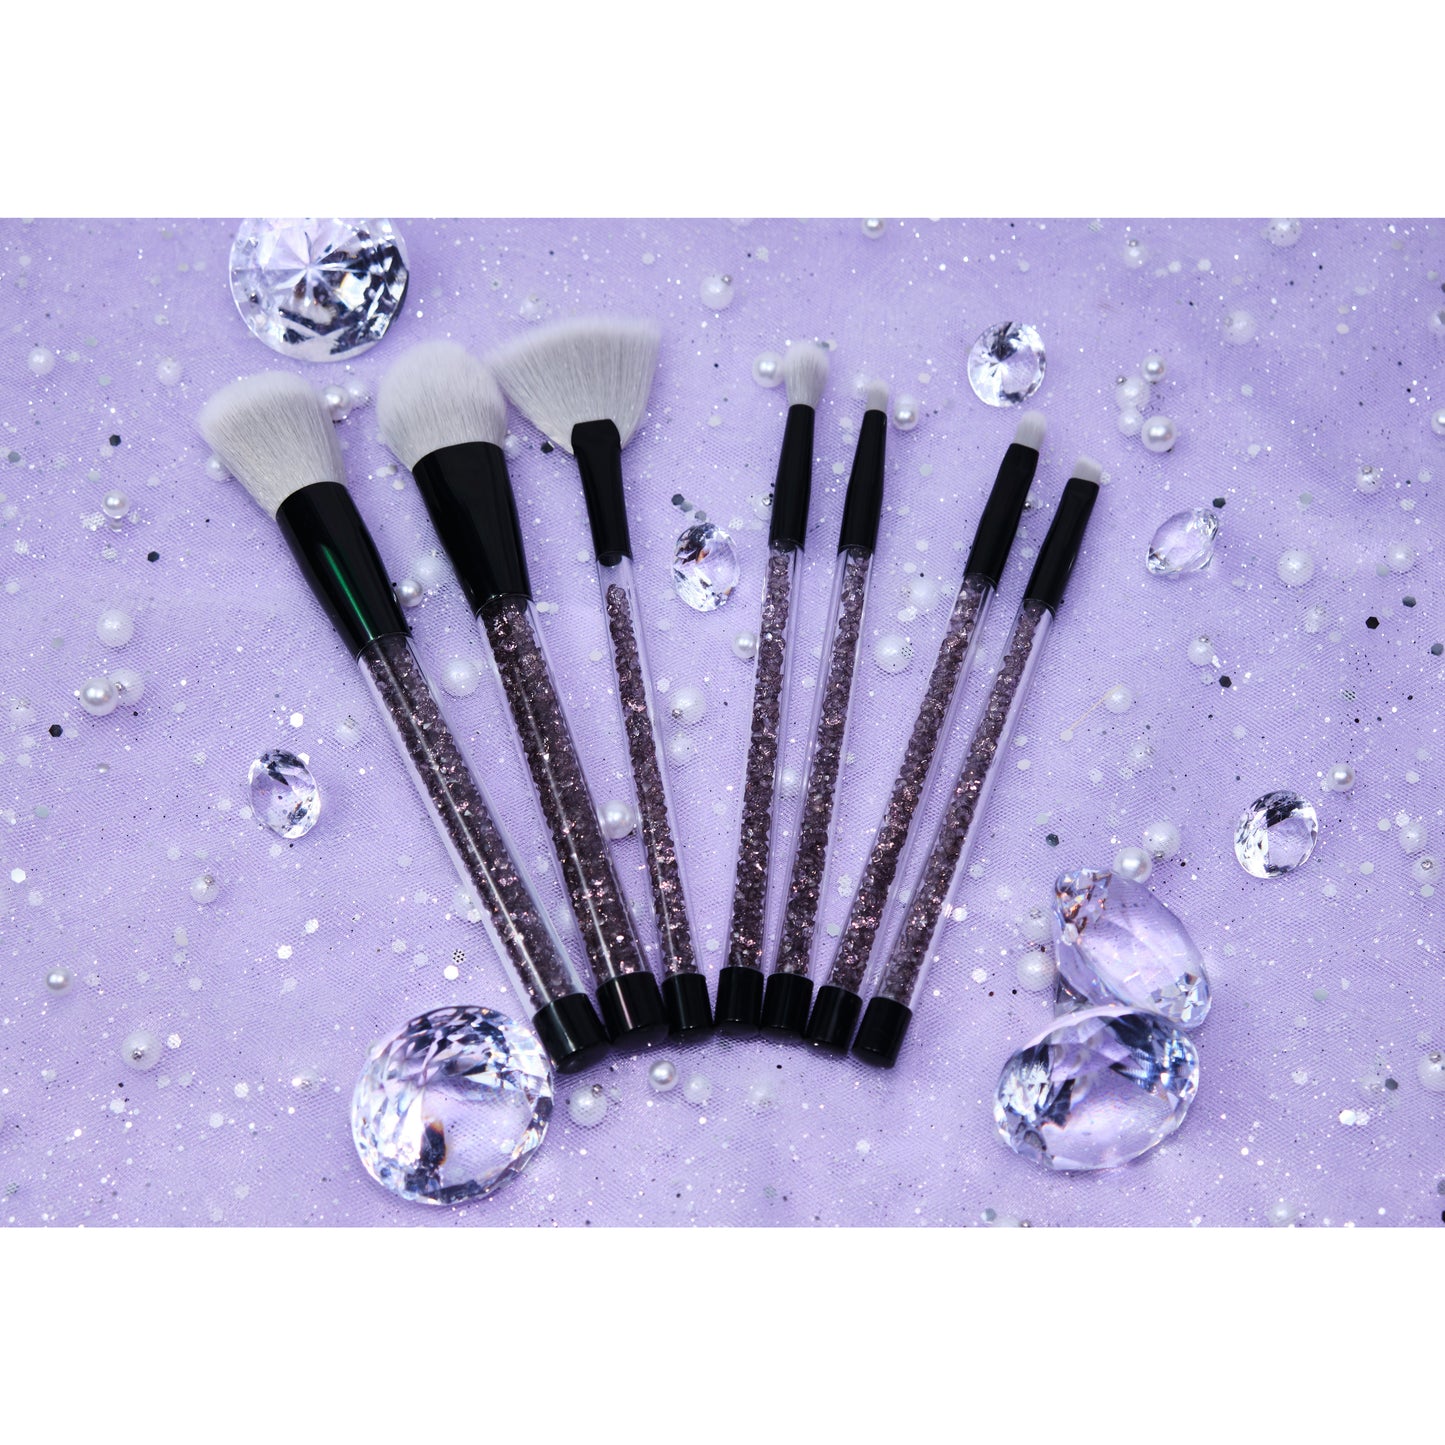 Twilight 7-Pc Makeup Brush Set